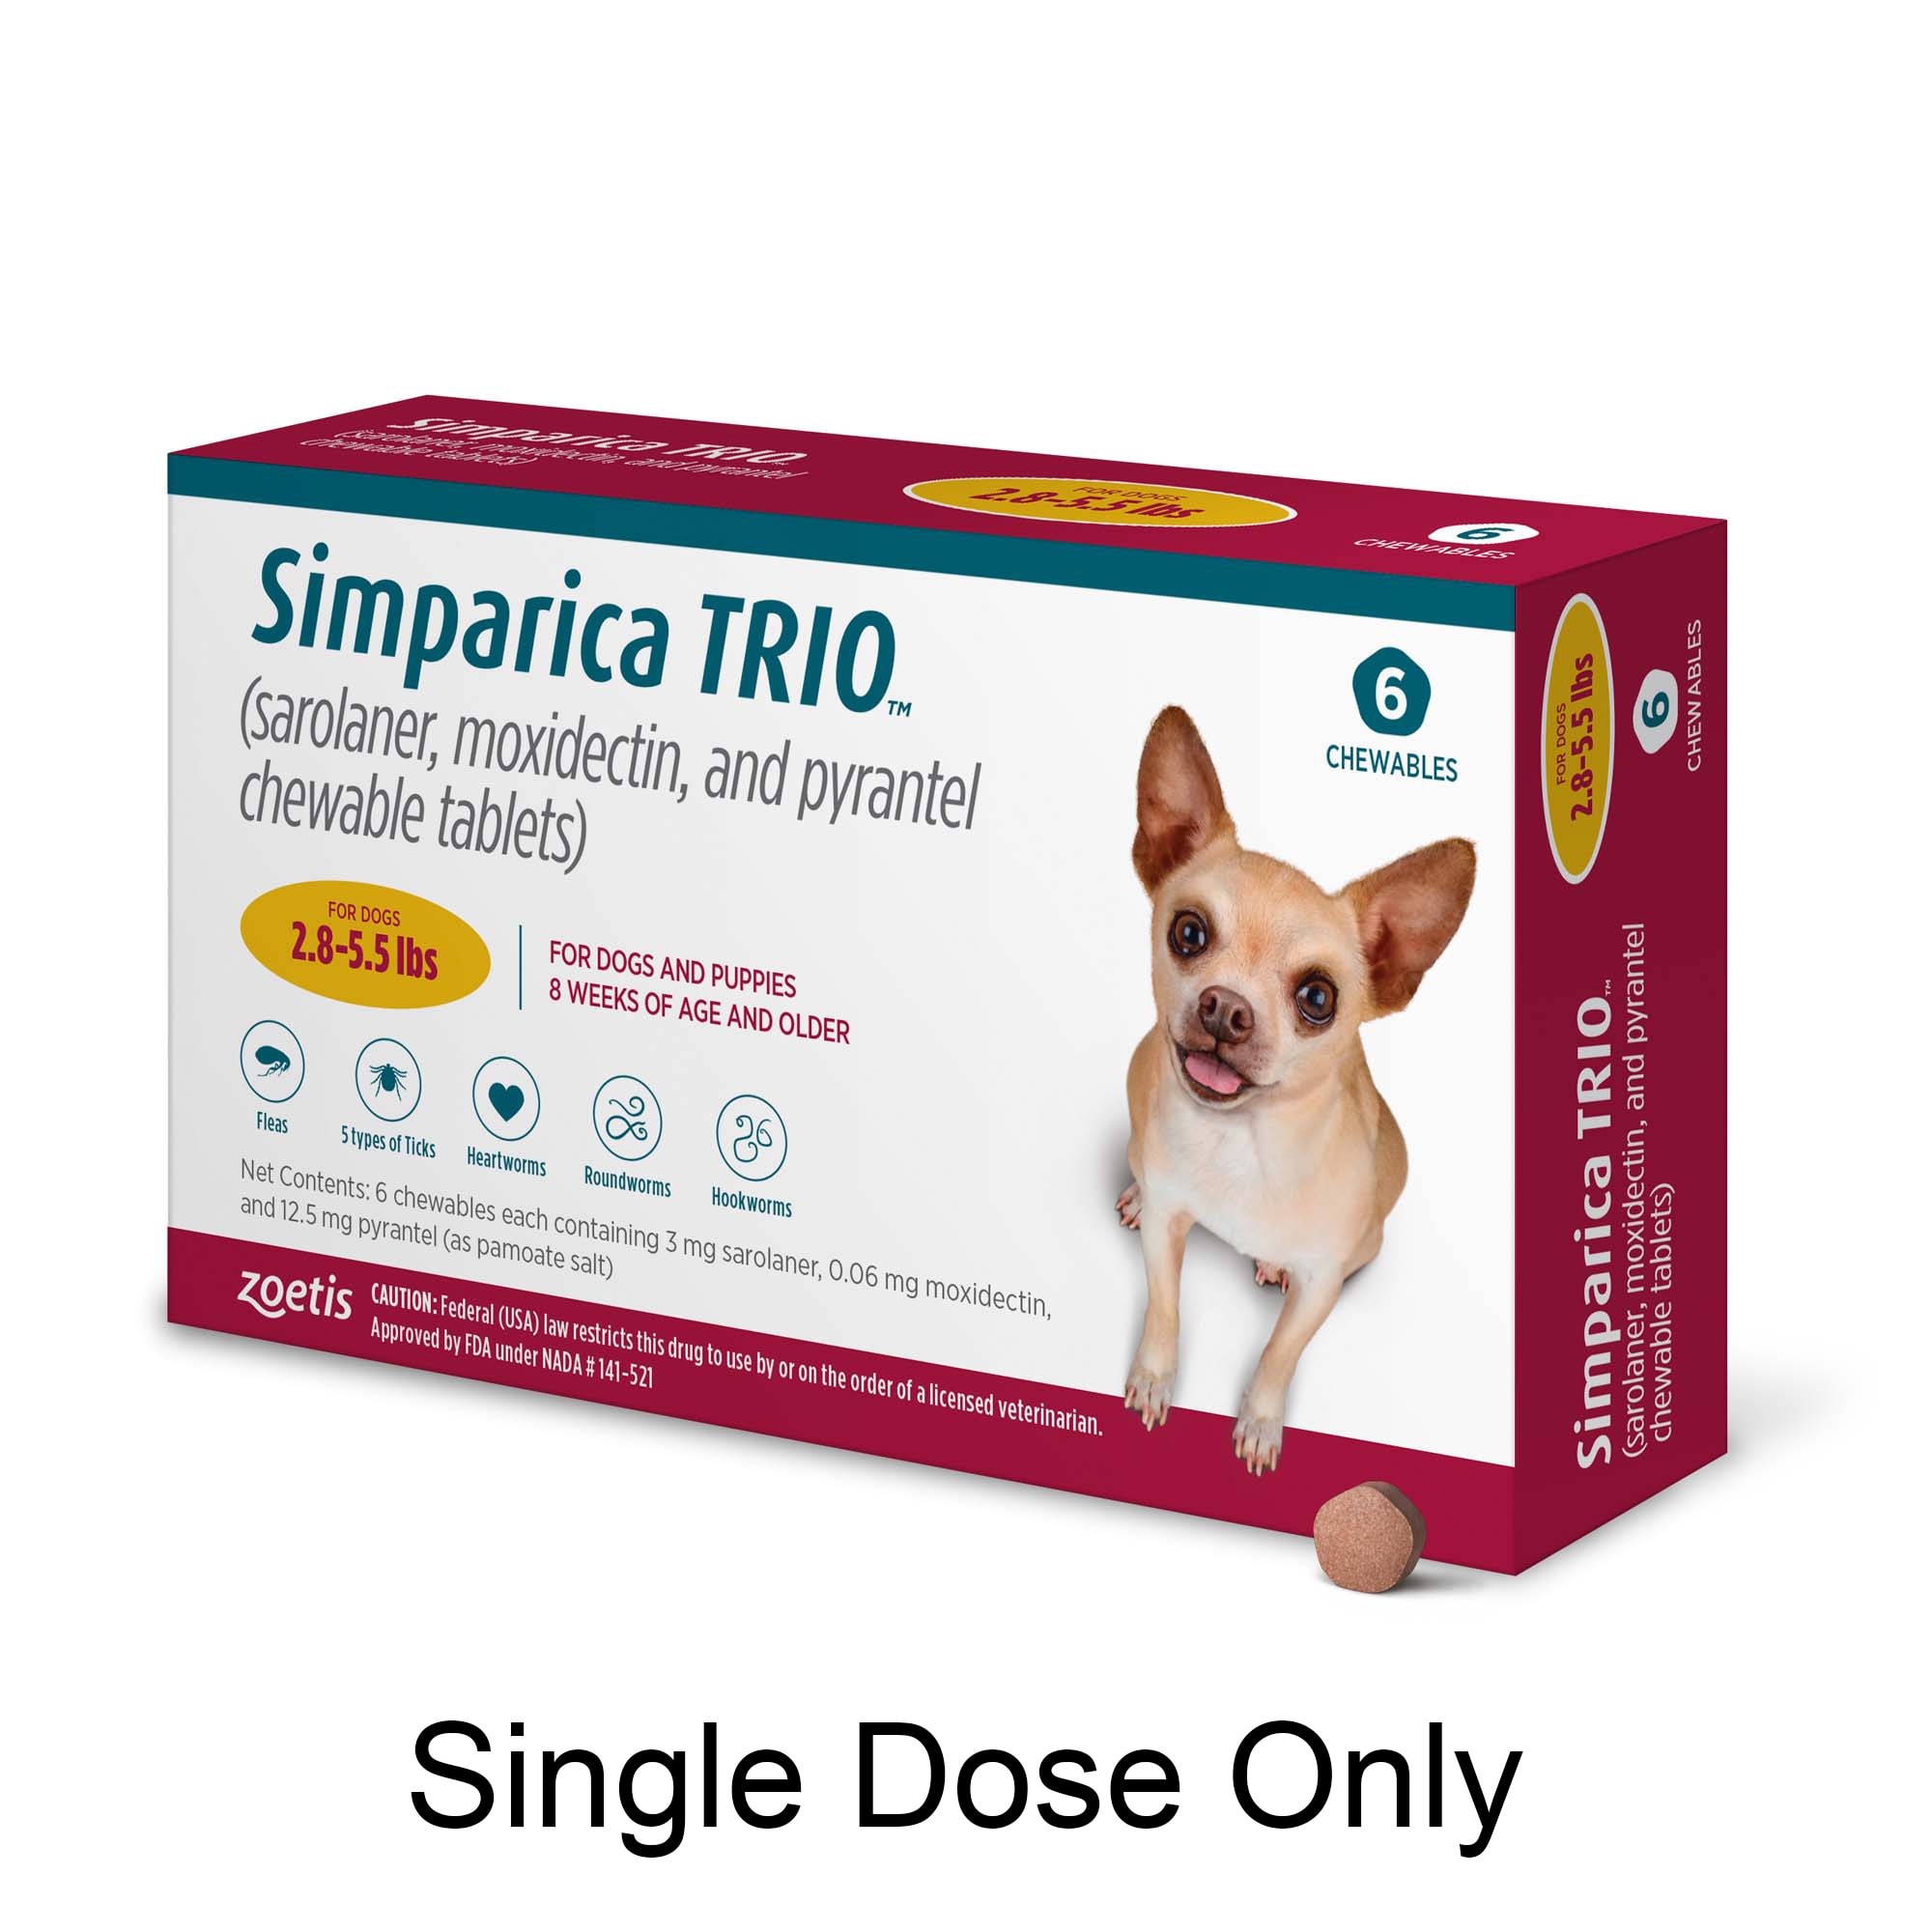 Simparica Trio 2.8-5.5 lbs. Dogs, 1 Month Supply, 1 CT